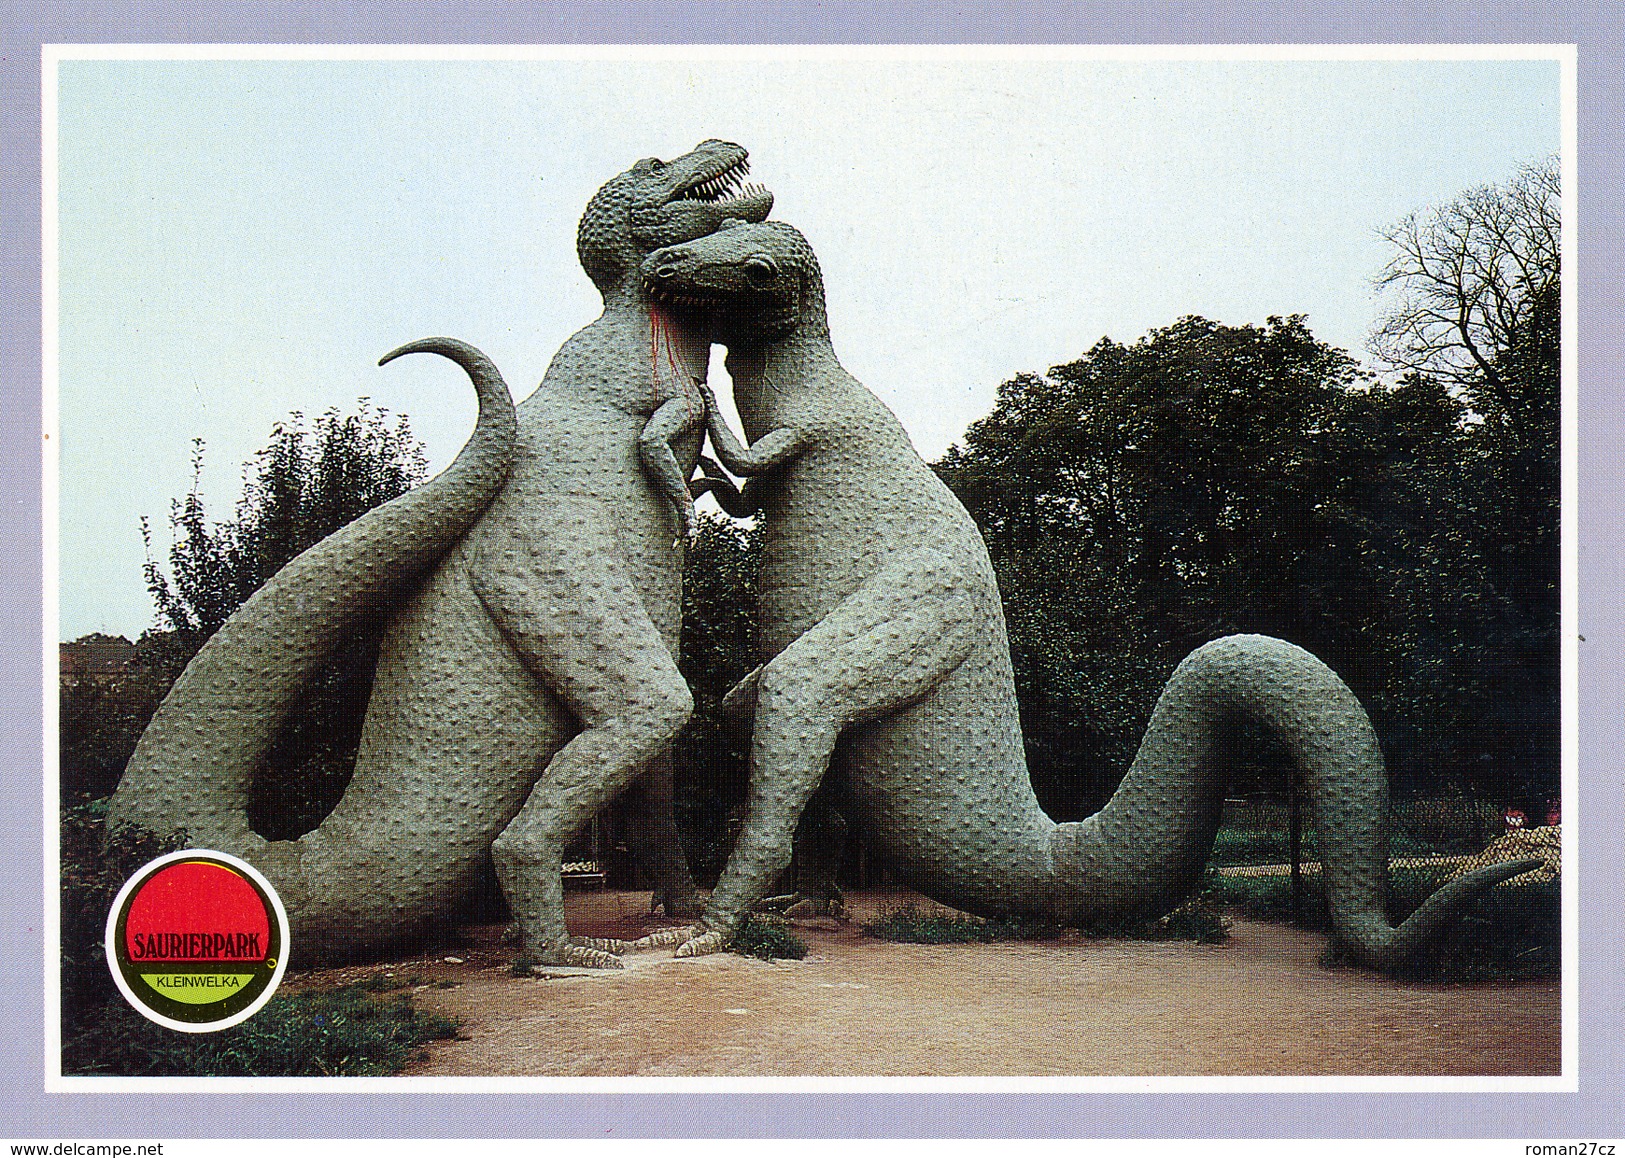 Saurierpark Kleinwelka, Germany, Ca. 1980s, Dinosaur - Tarbosaurus - Bautzen